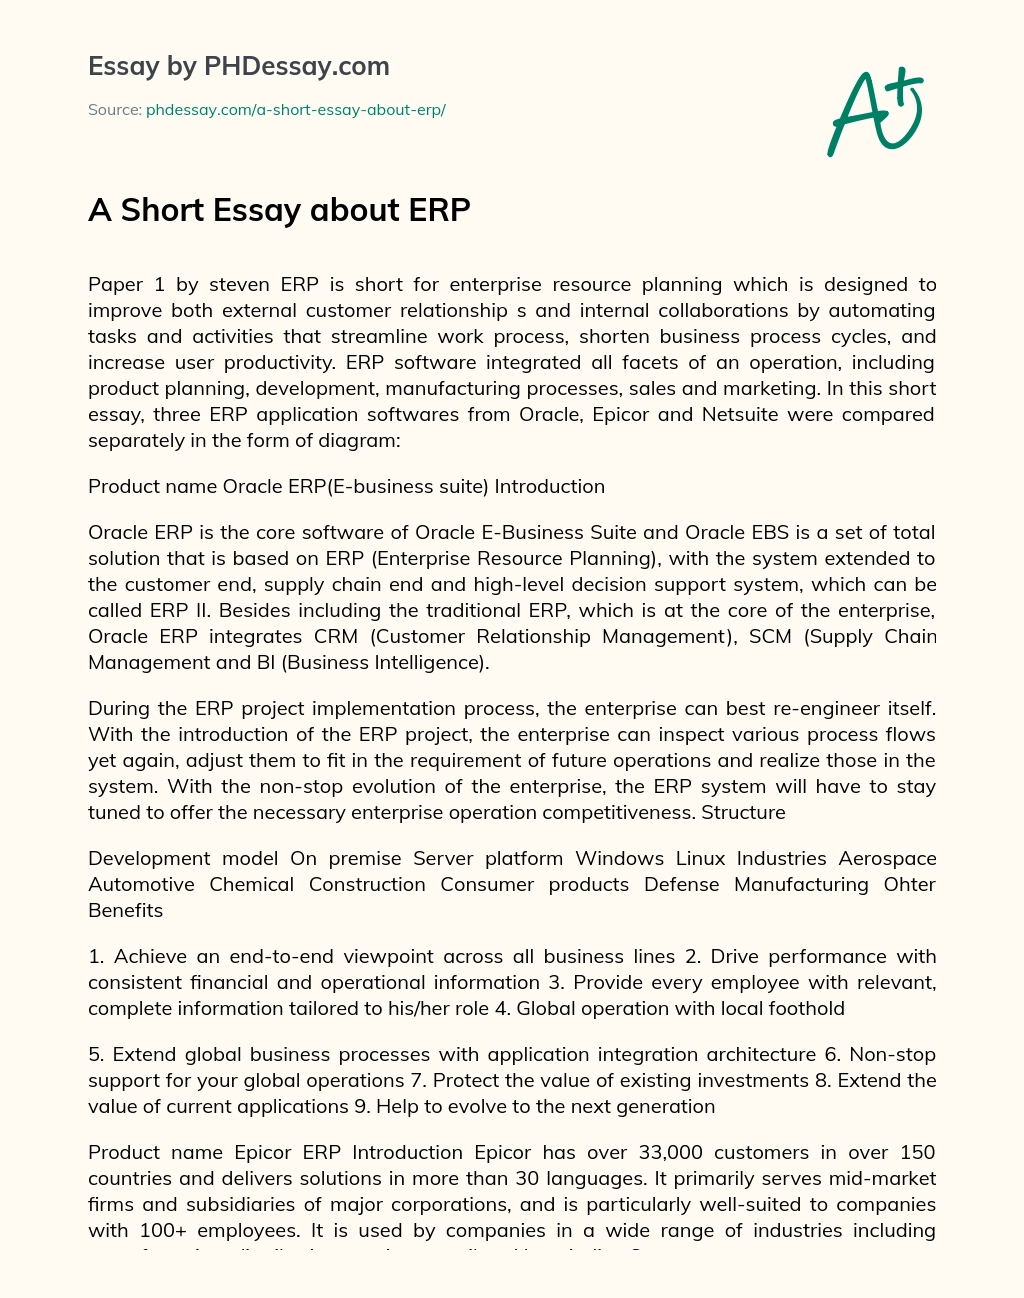 A Short Essay about ERP essay